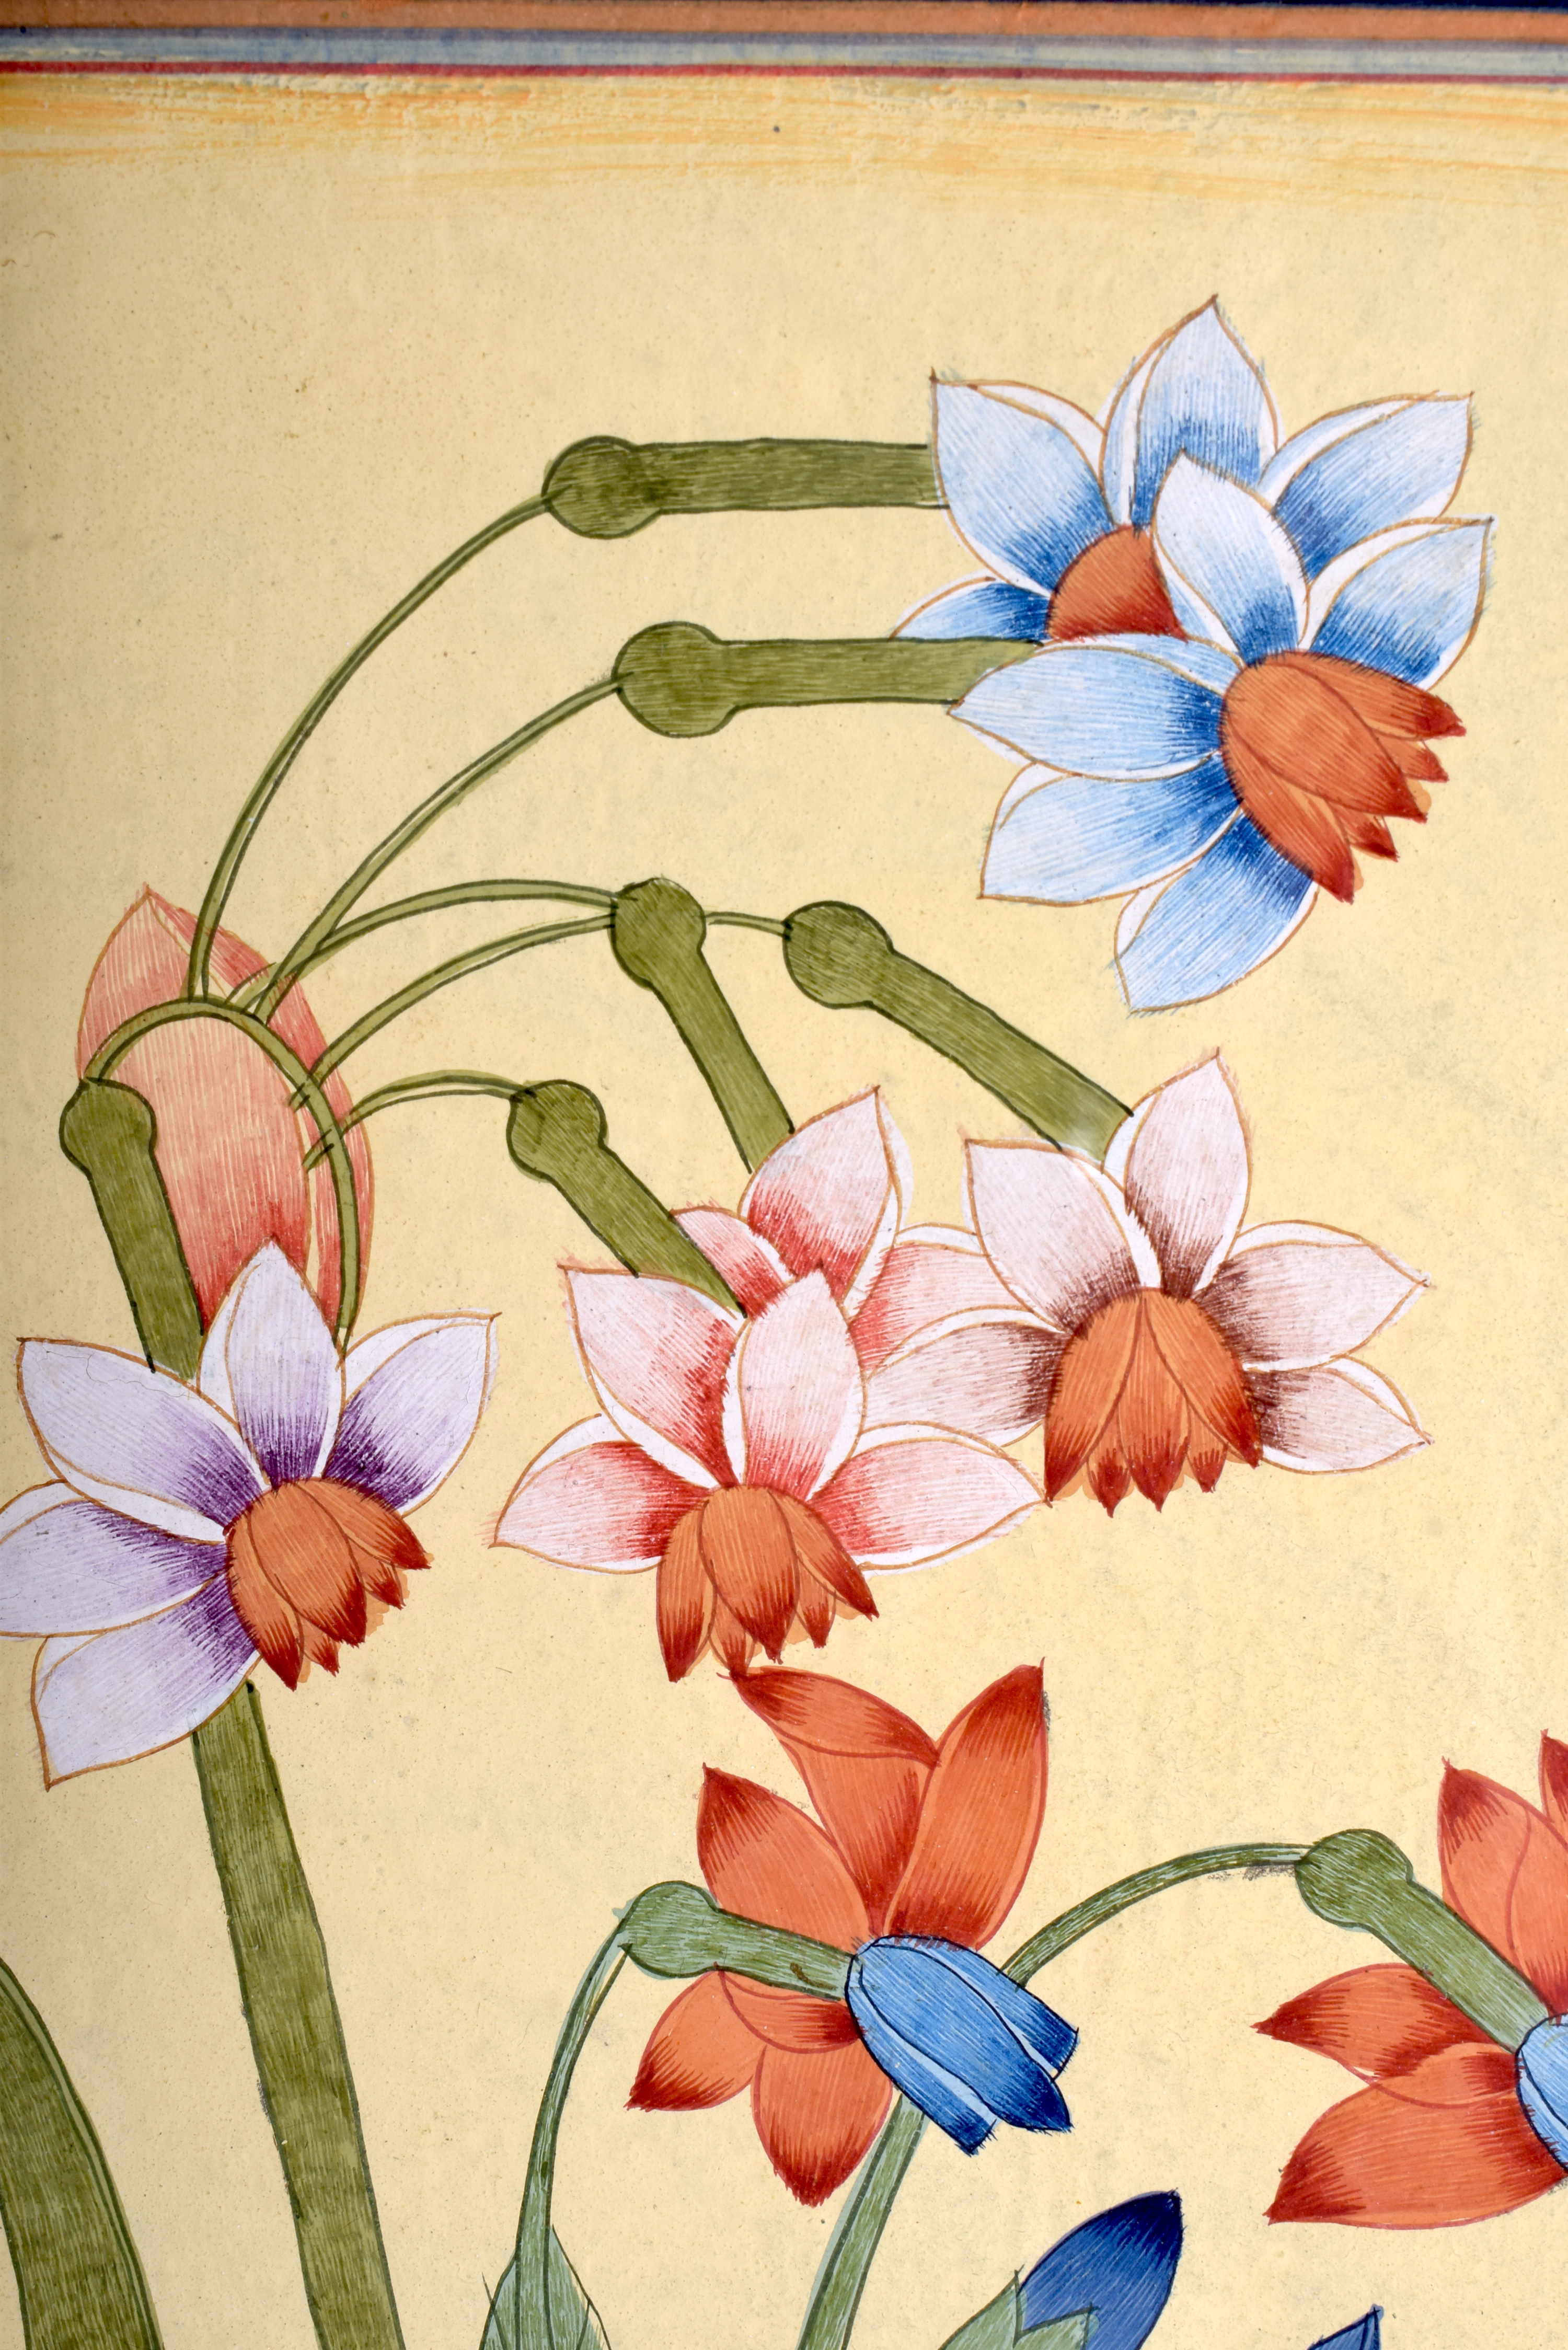 Mughal School (19th/20th Century) Gouache, Botanical flowers. Image 31 cm x 19 cm. - Image 2 of 2